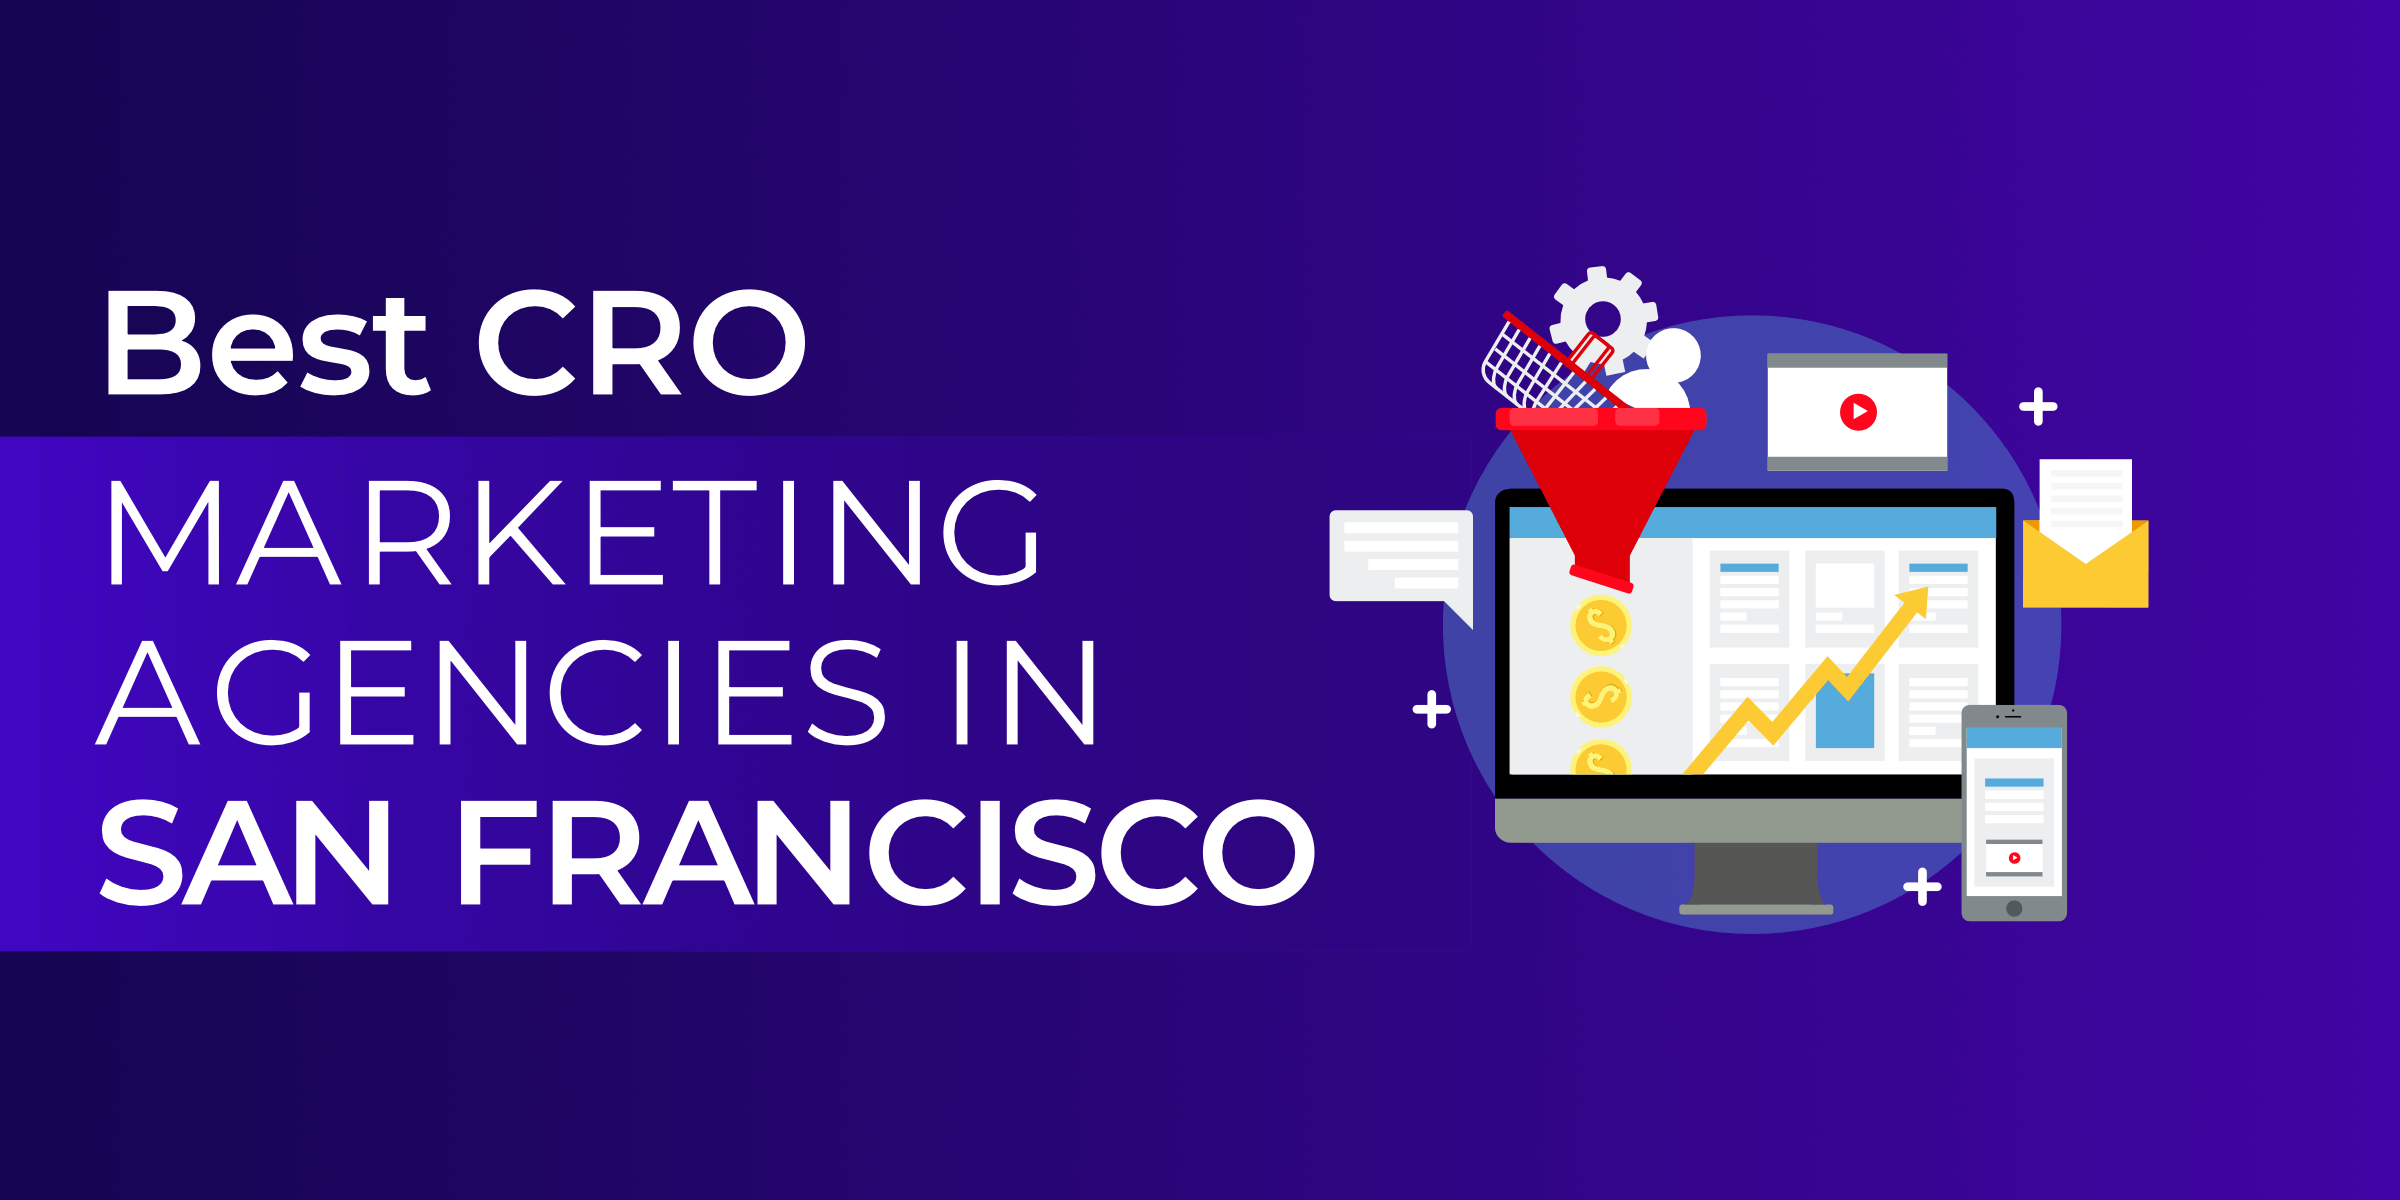 Best CRO Marketing Agencies in San Francisco